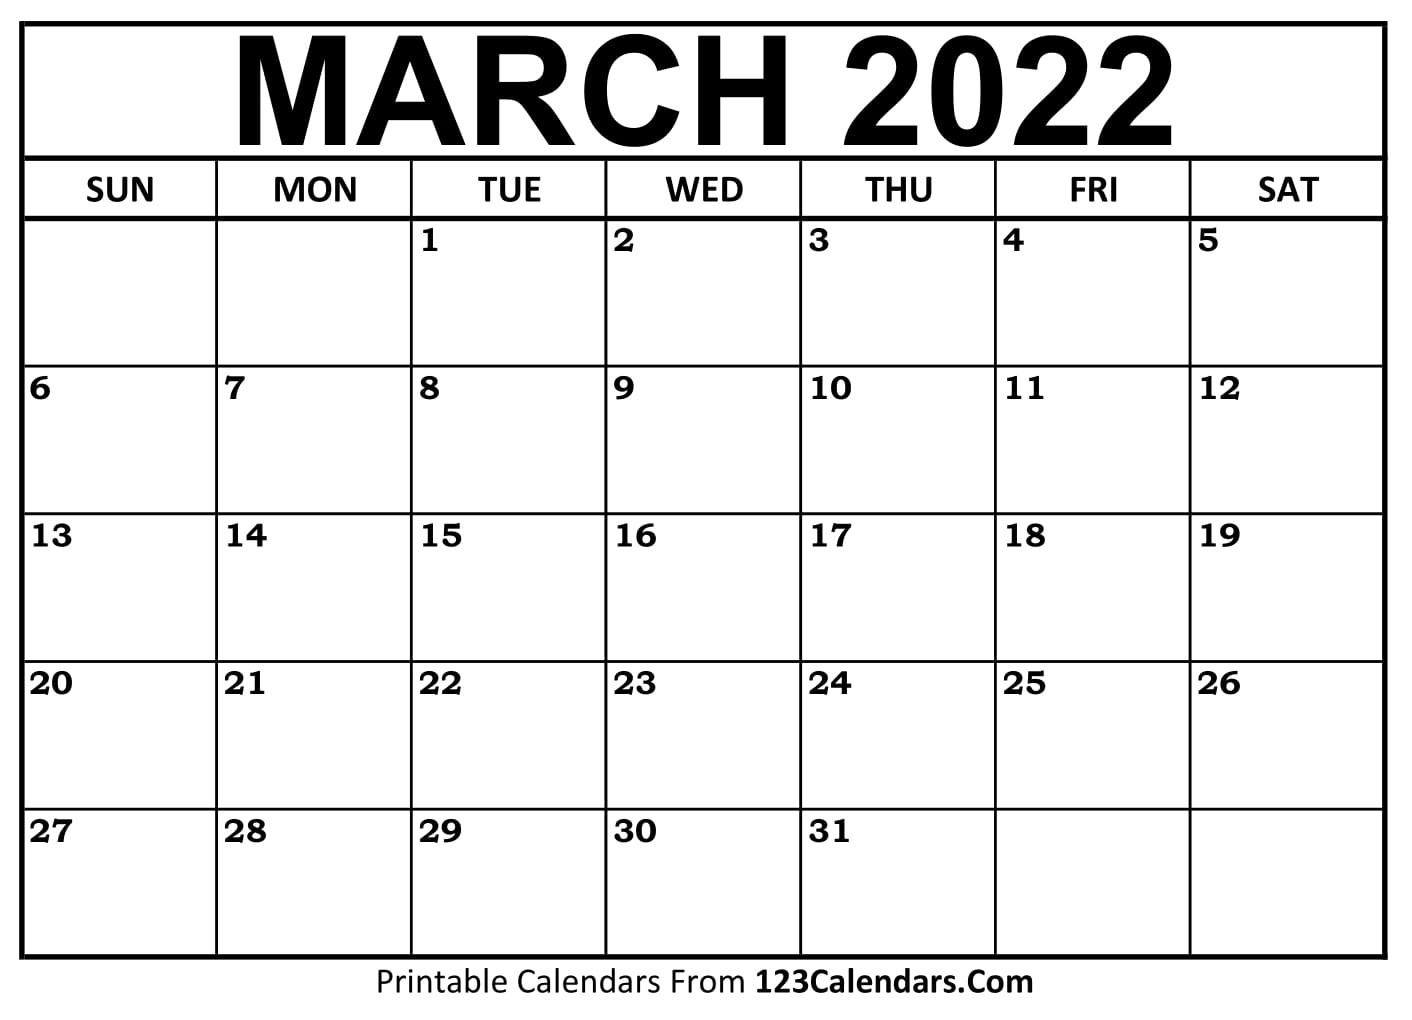 March Schedule 2022 Printable March 2022 Calendar Templates - 123Calendars.com